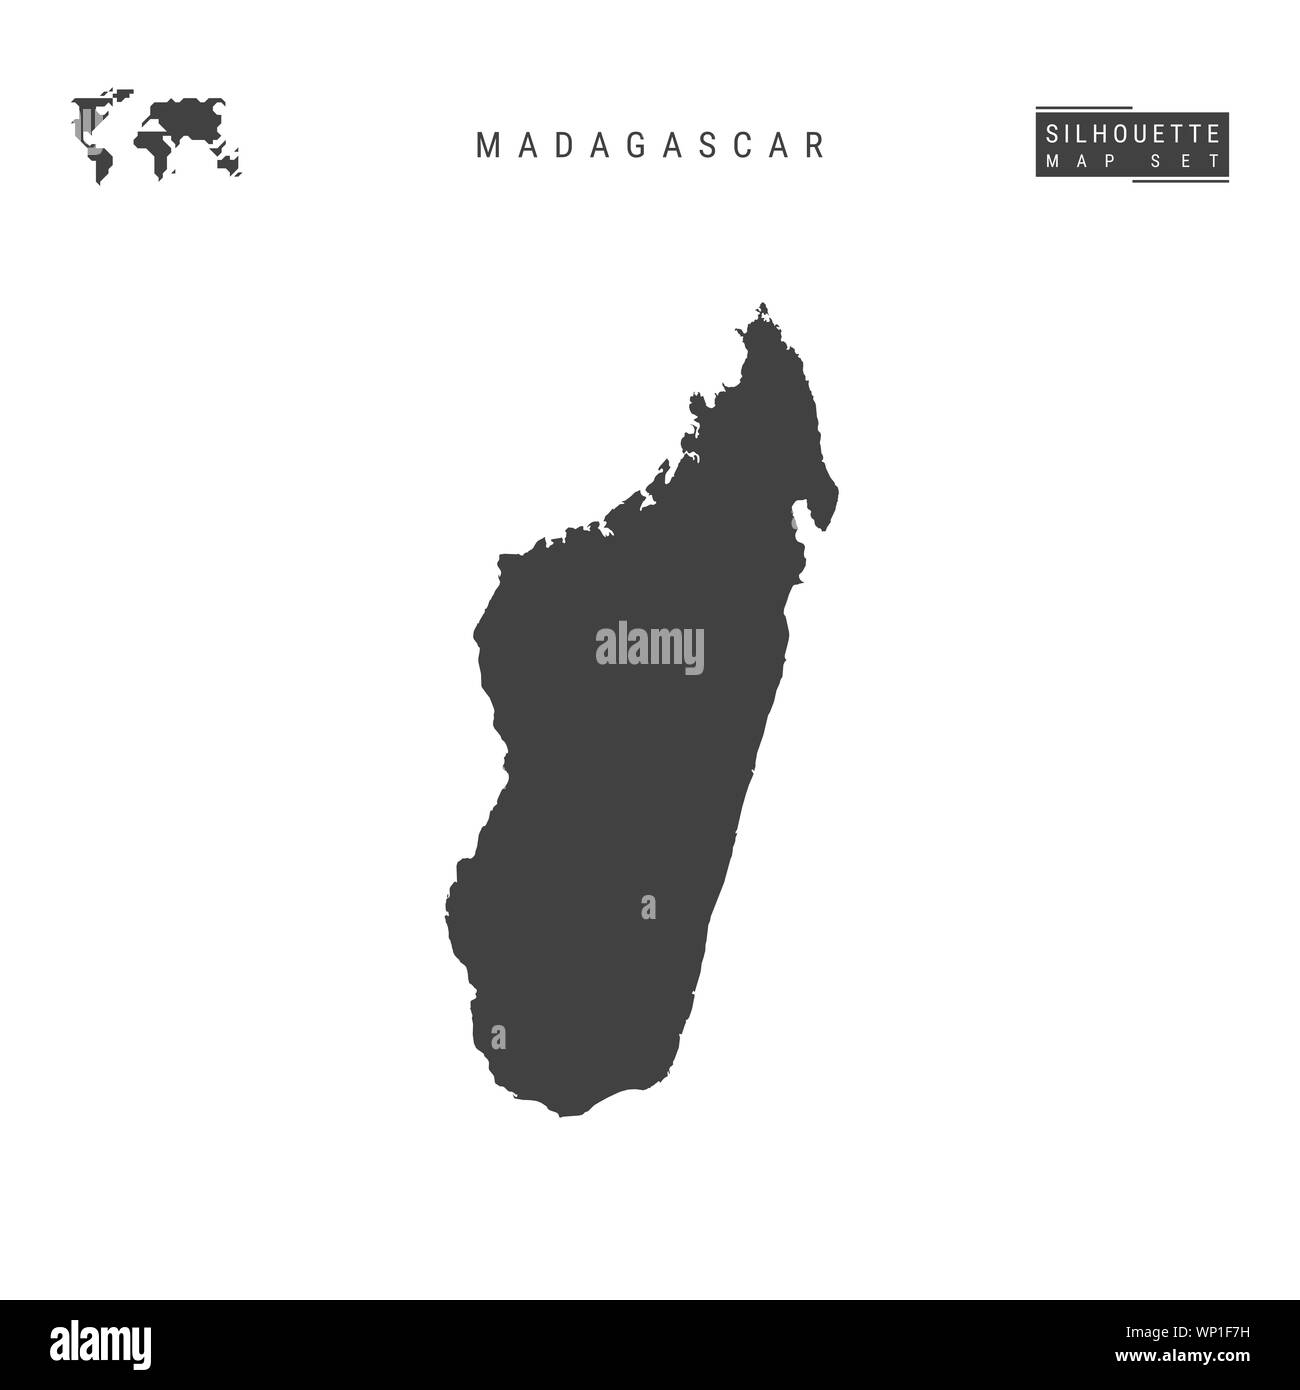 Madagascar Blank Map Isolated on White Background. High-Detailed Black Silhouette Map of Madagascar. Stock Photo